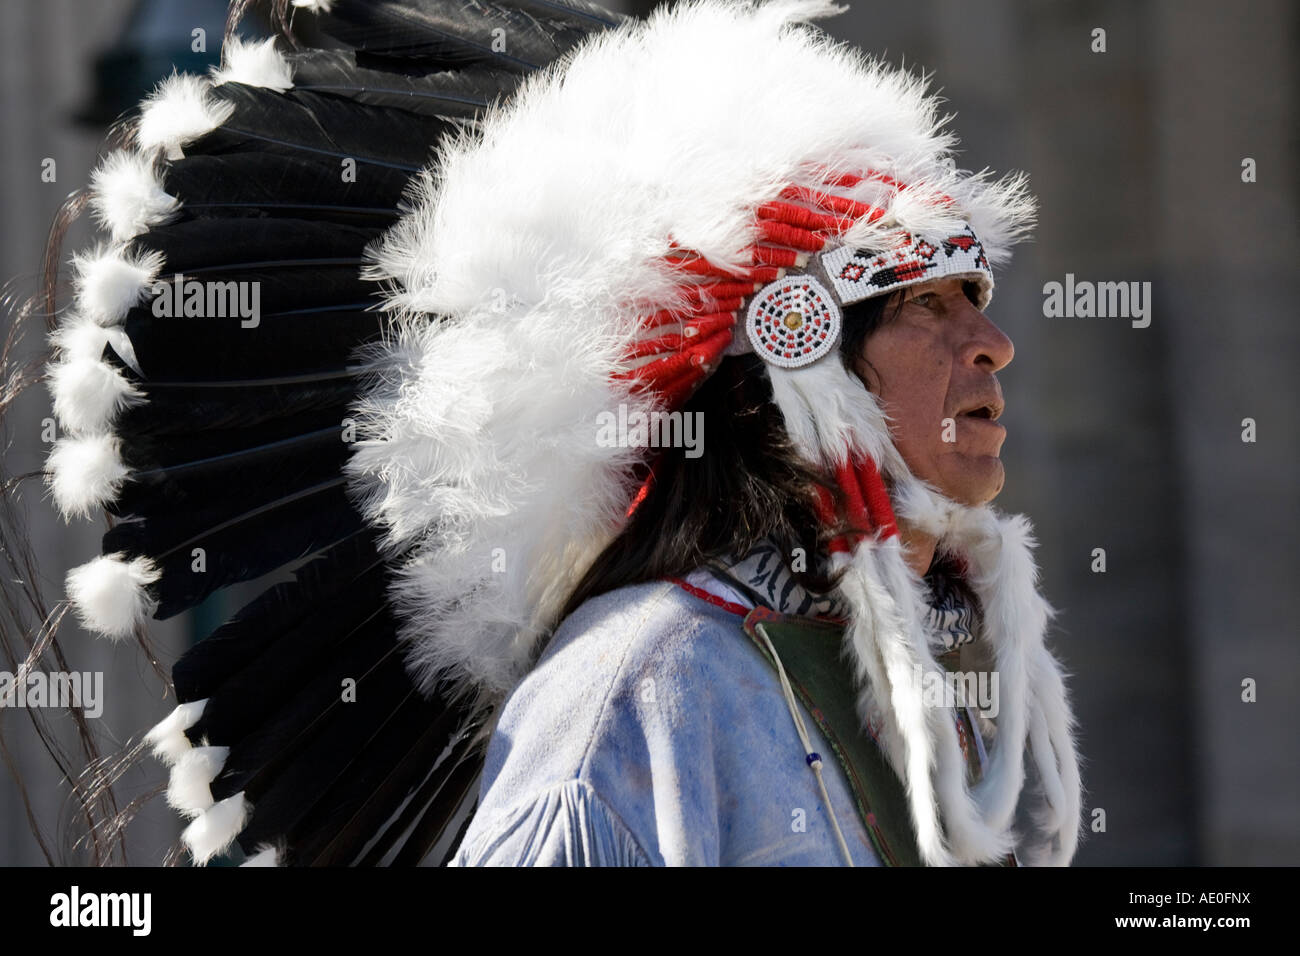 American Indian Chief auf dem Edinburgh Festival Fringe Princes Street, Schottland. Stockfoto